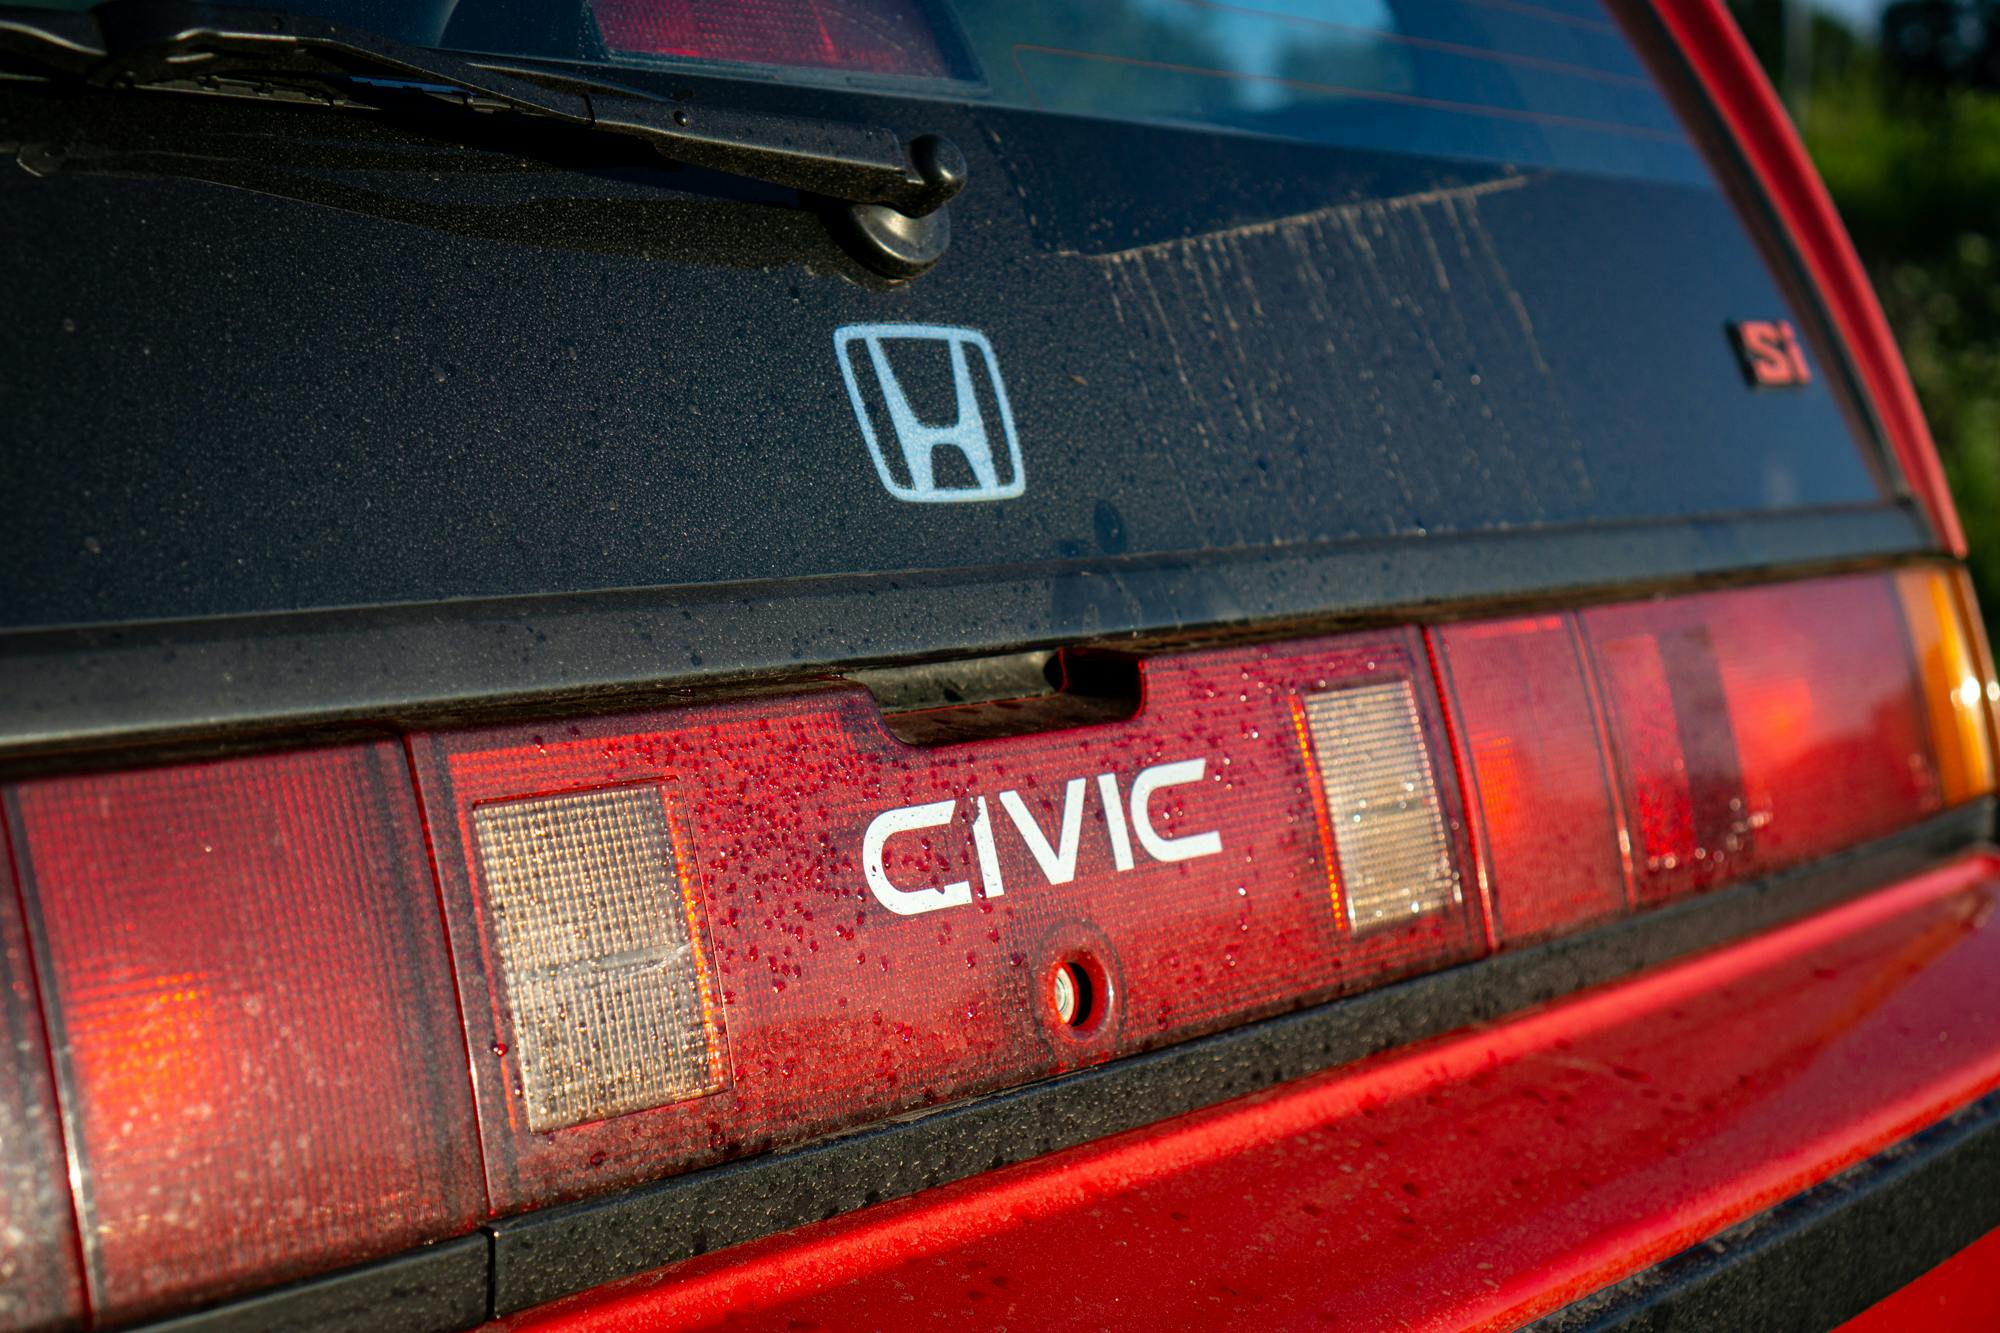 1986 Honda Civic Si rear window